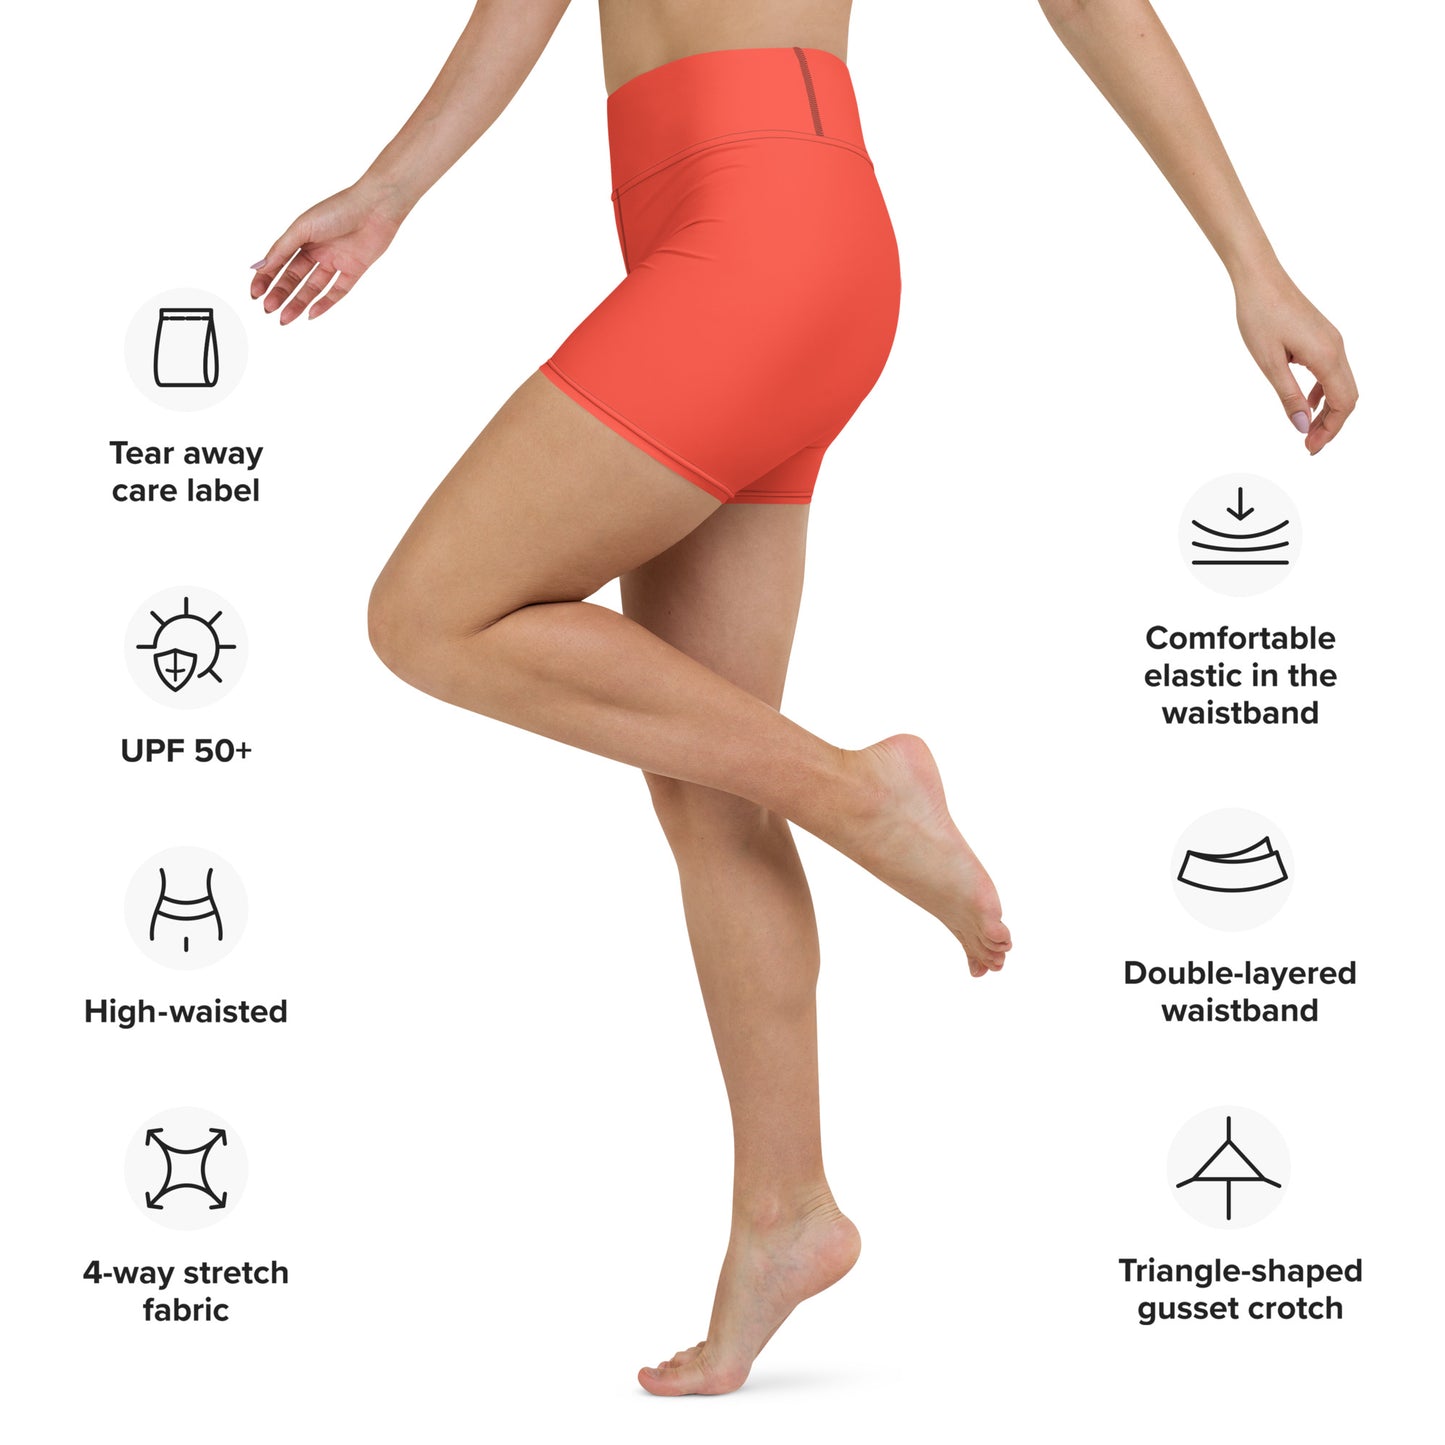 Surma Solid Red High Waist Yoga Shorts / Bike Shorts with Inside Pocket